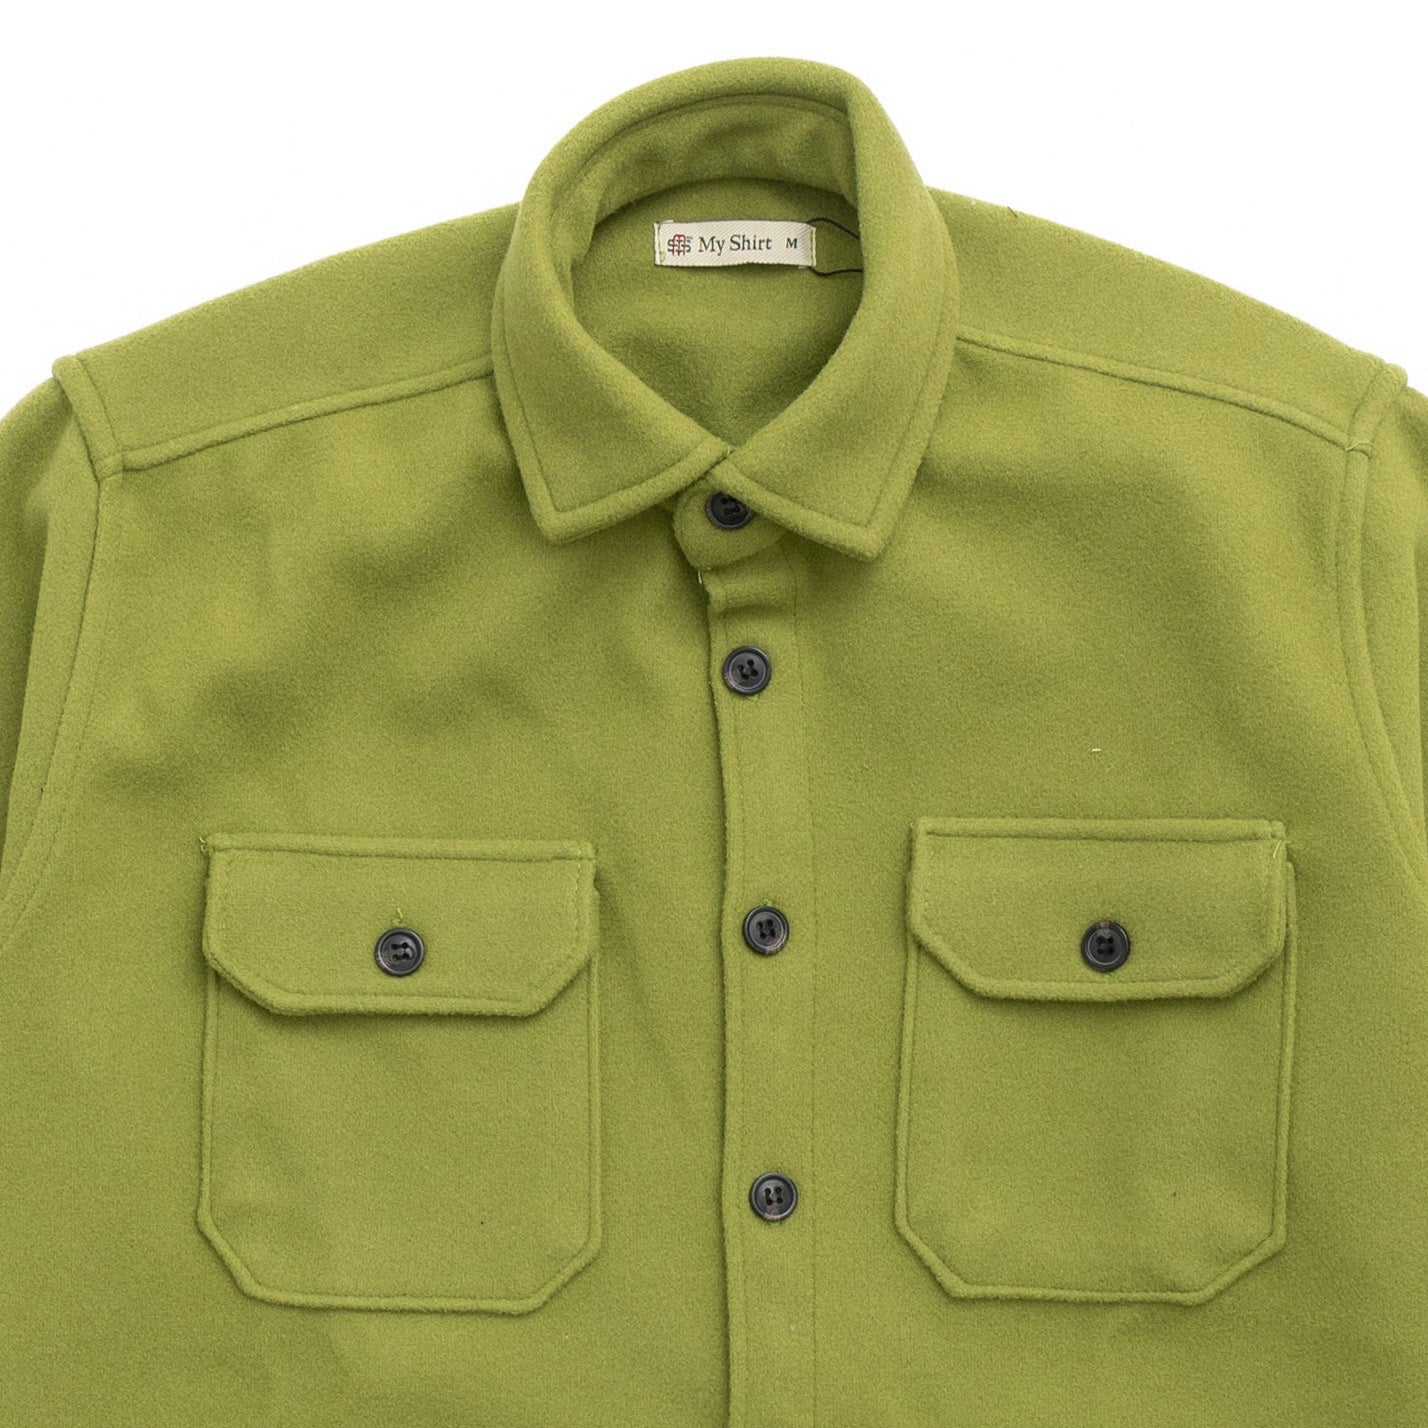 Lime green plain wool shirt